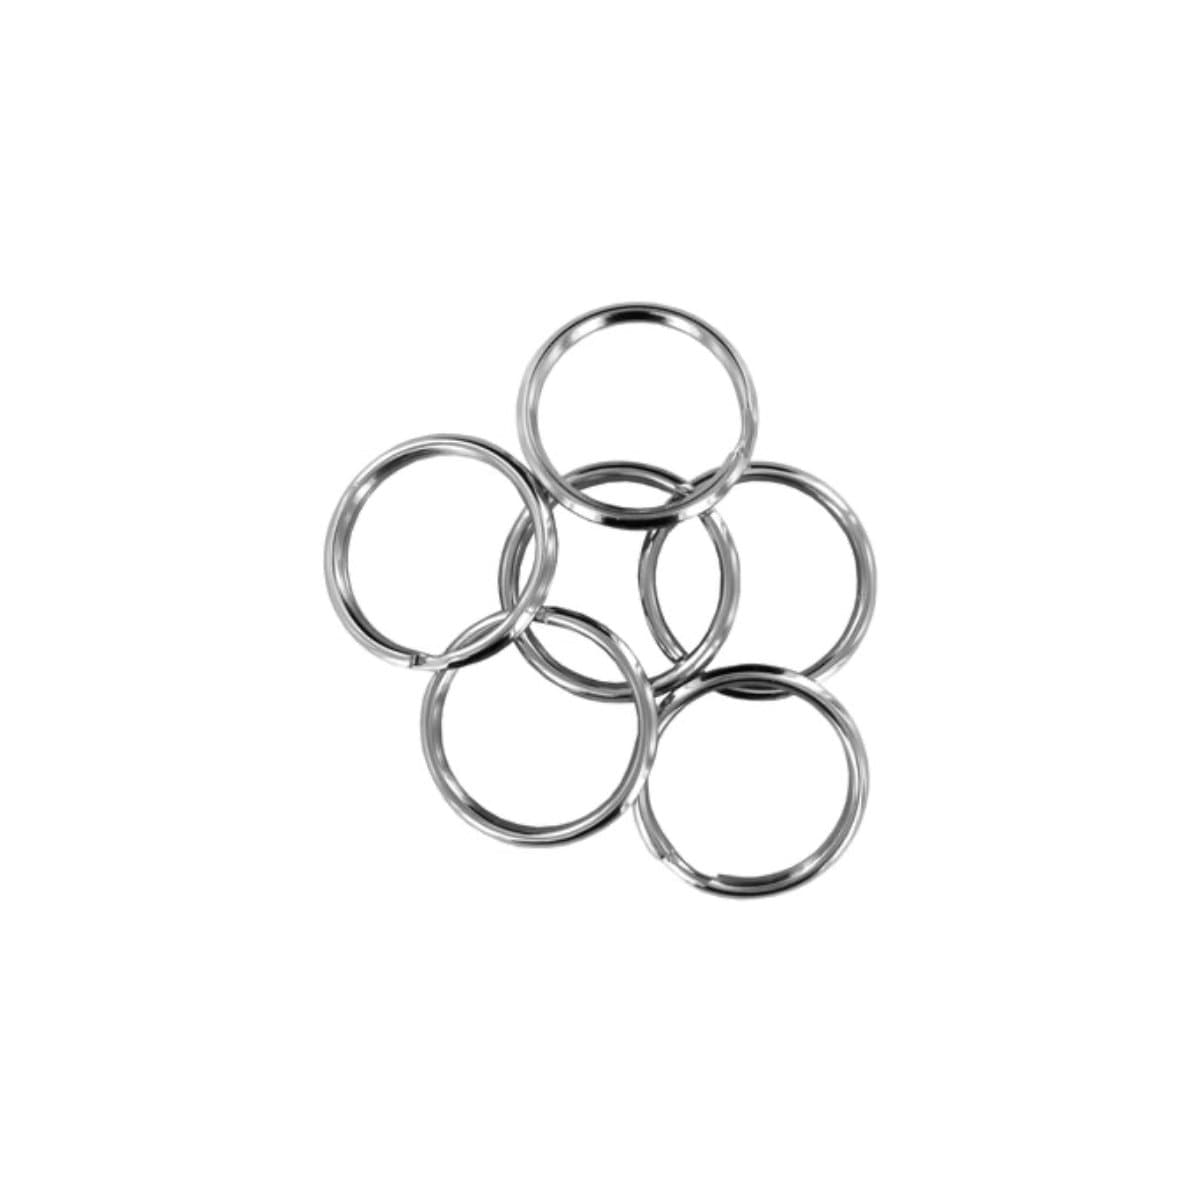 Split Key Ring, Nickel-Plated